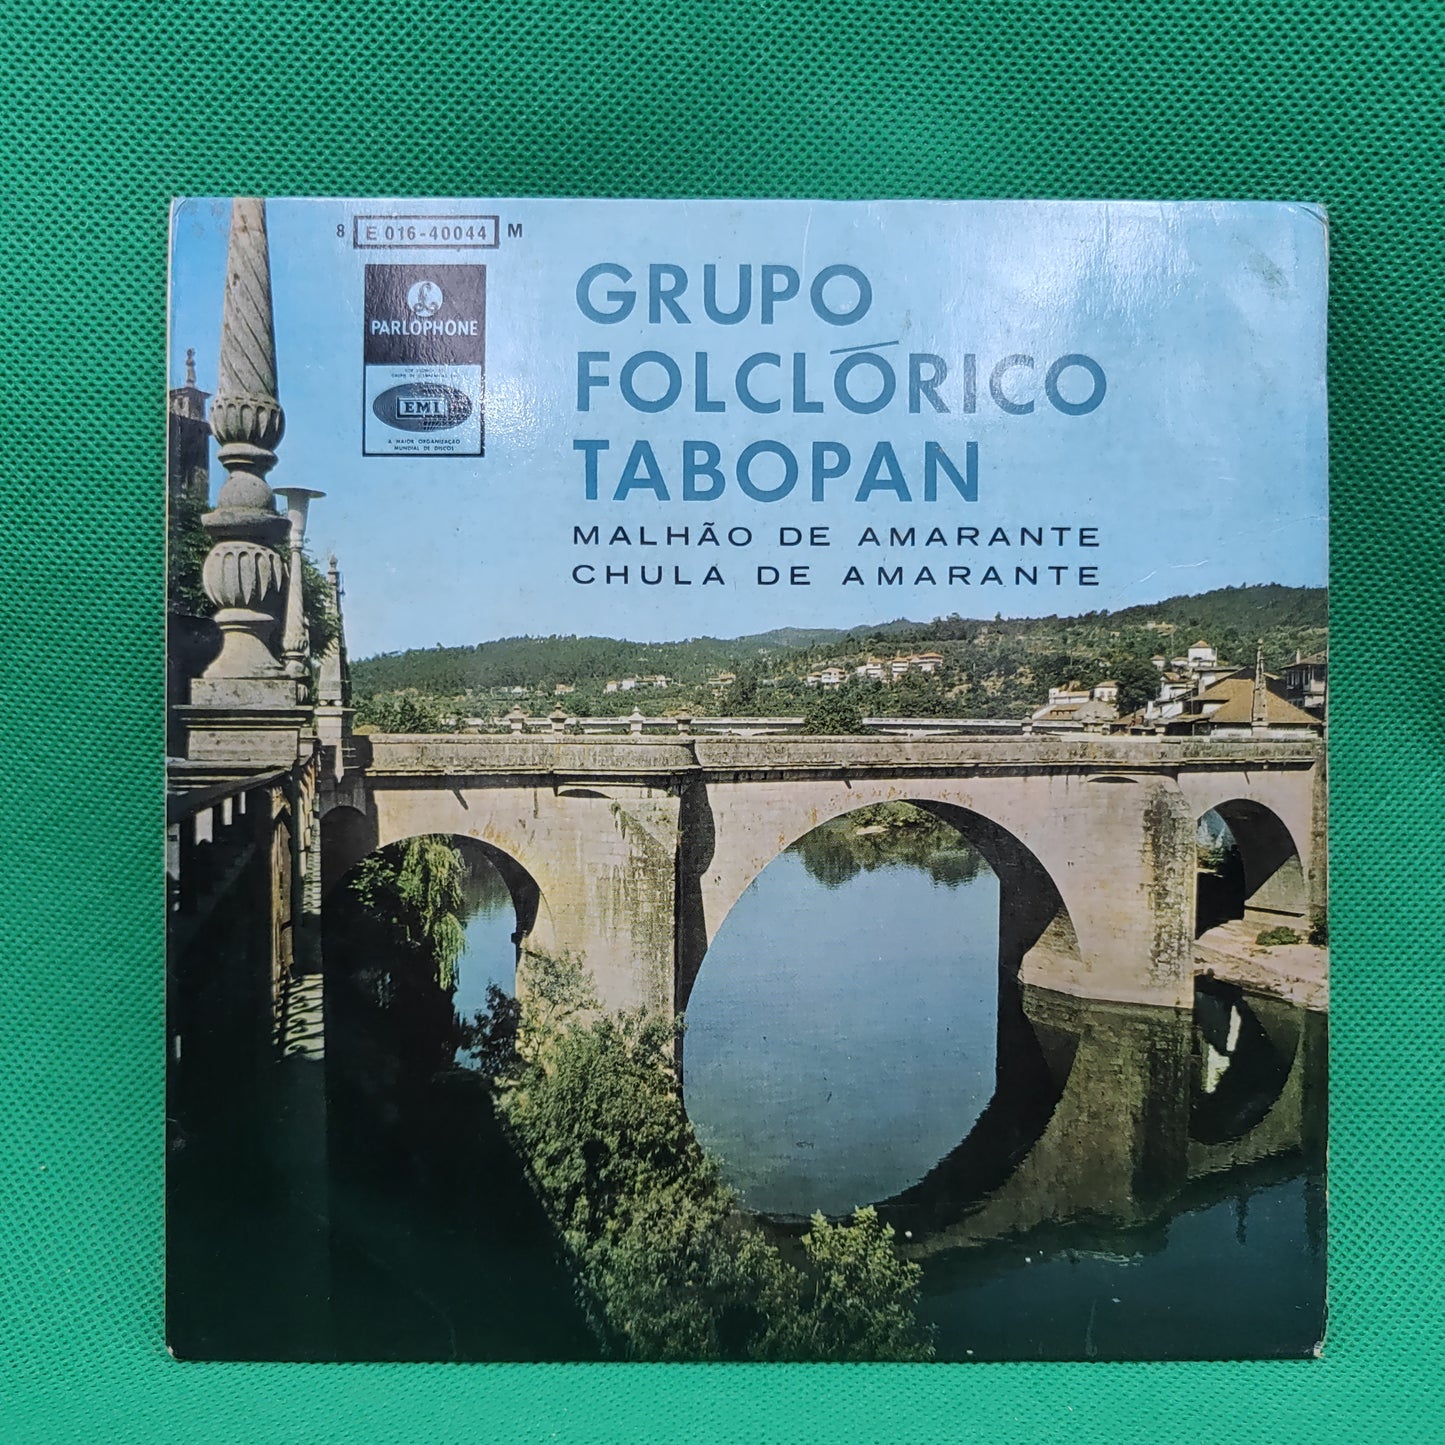 Grupo Folclórico TABPAN